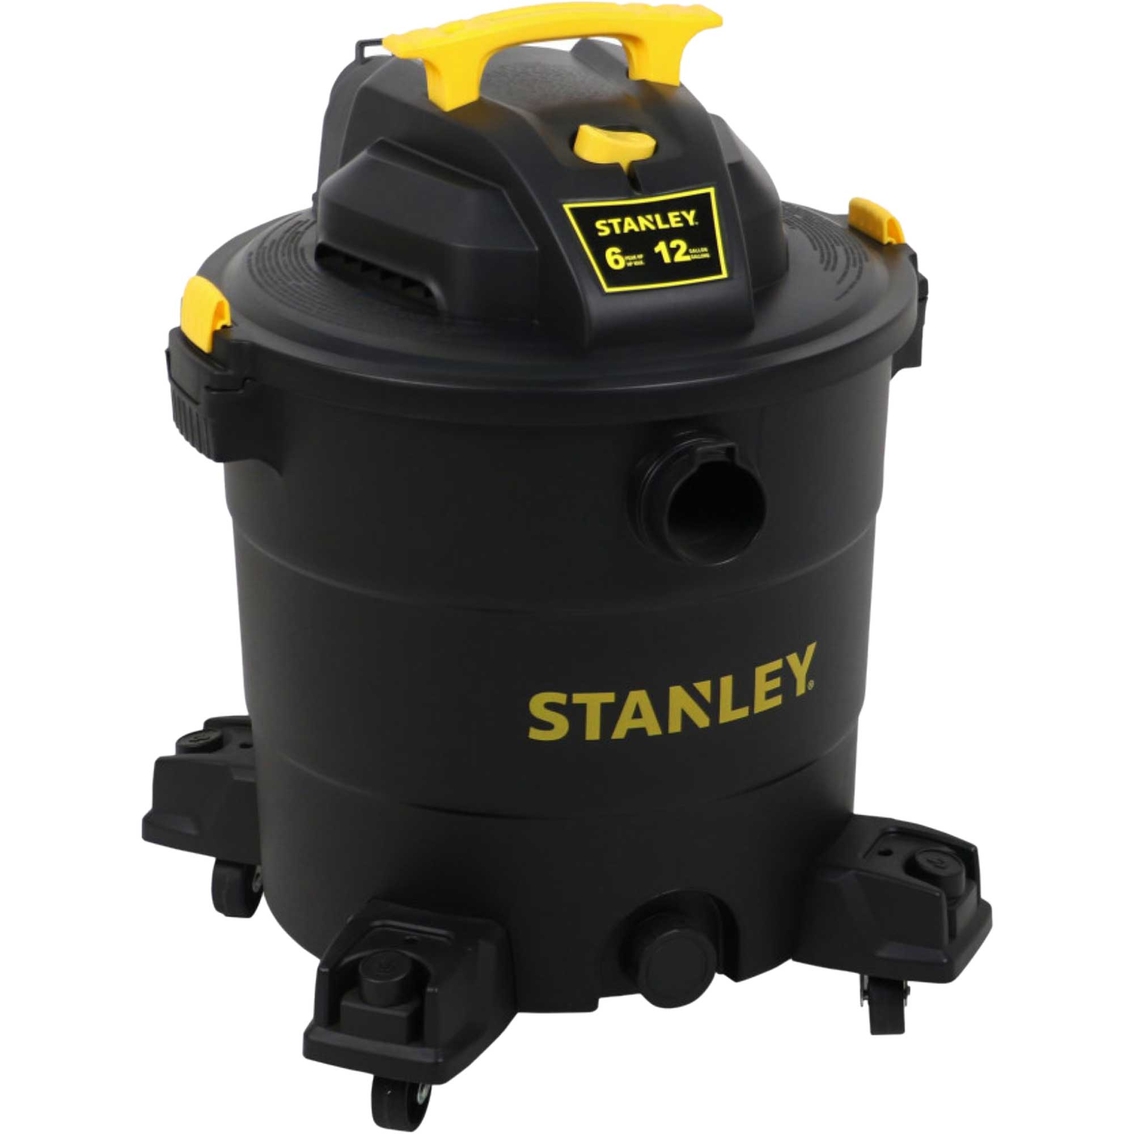 Stanley 12 gal. 6 Horsepower Wet/Dry Vacuum - Image 4 of 6